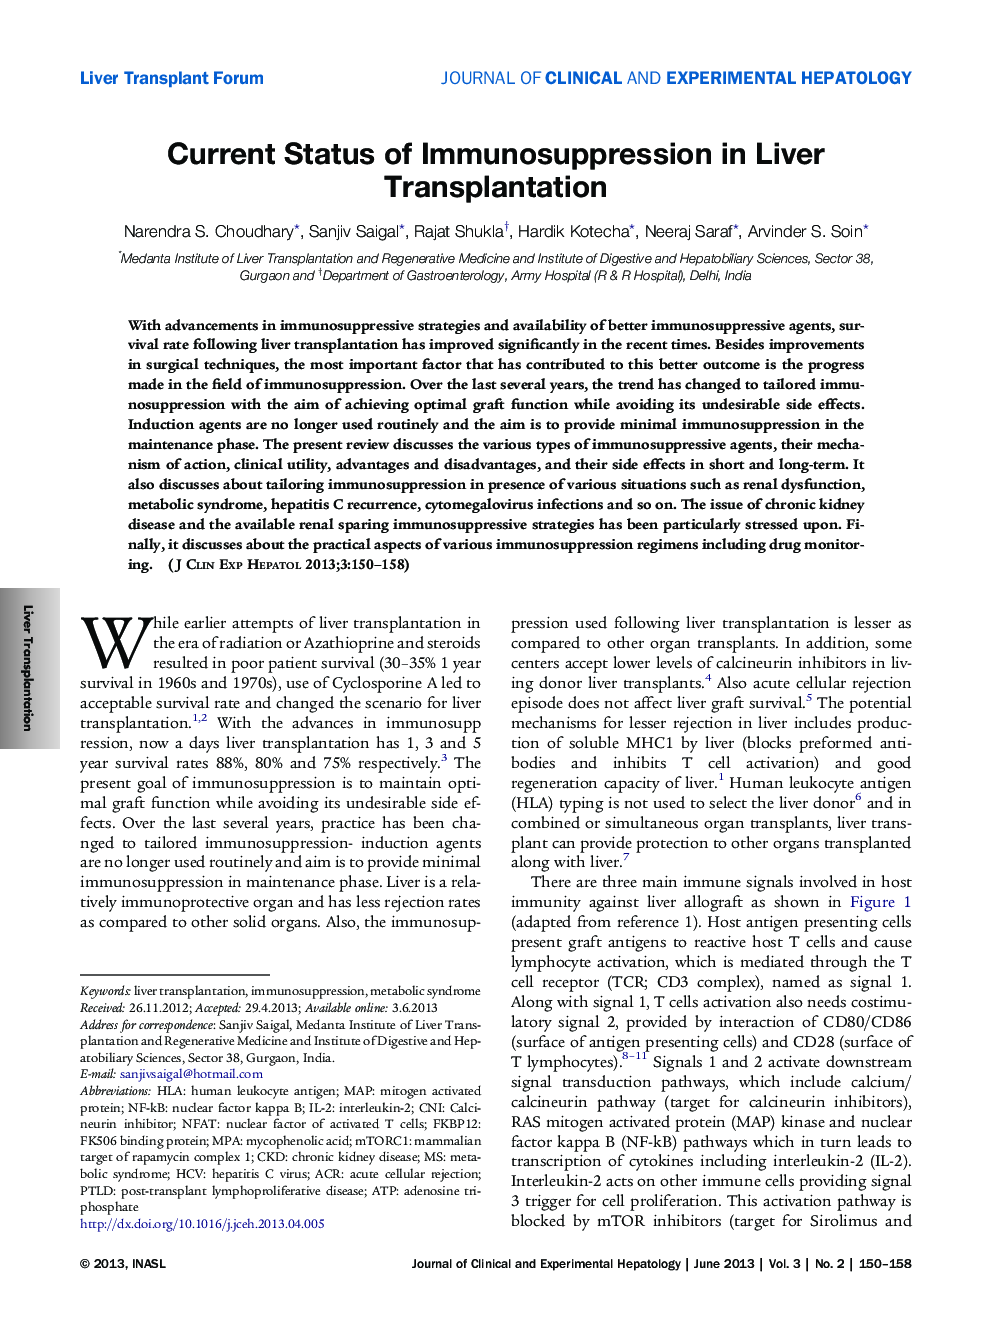 Current Status of Immunosuppression in Liver Transplantation